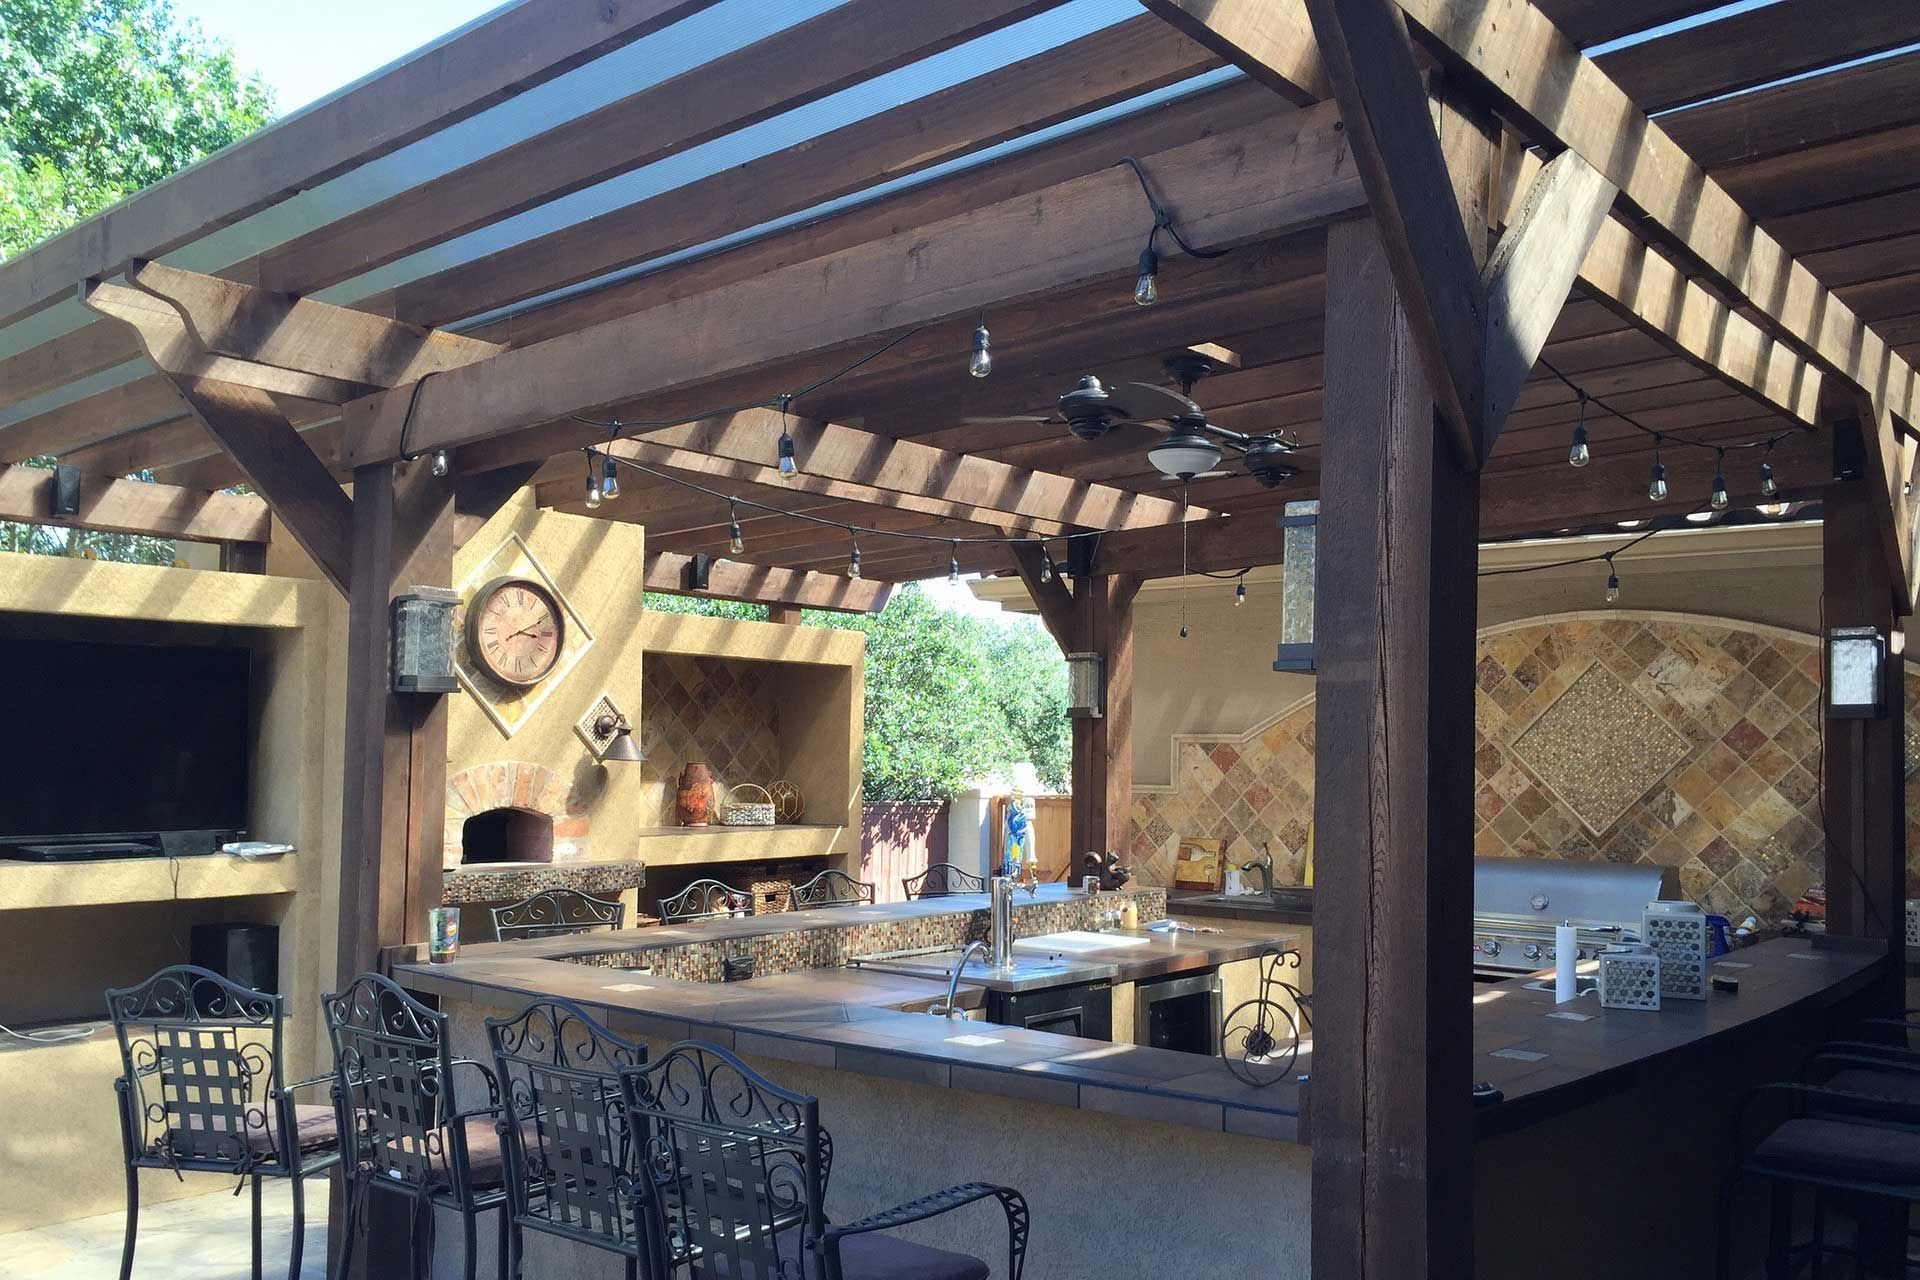 Outdoor luxury kitchen with pergola